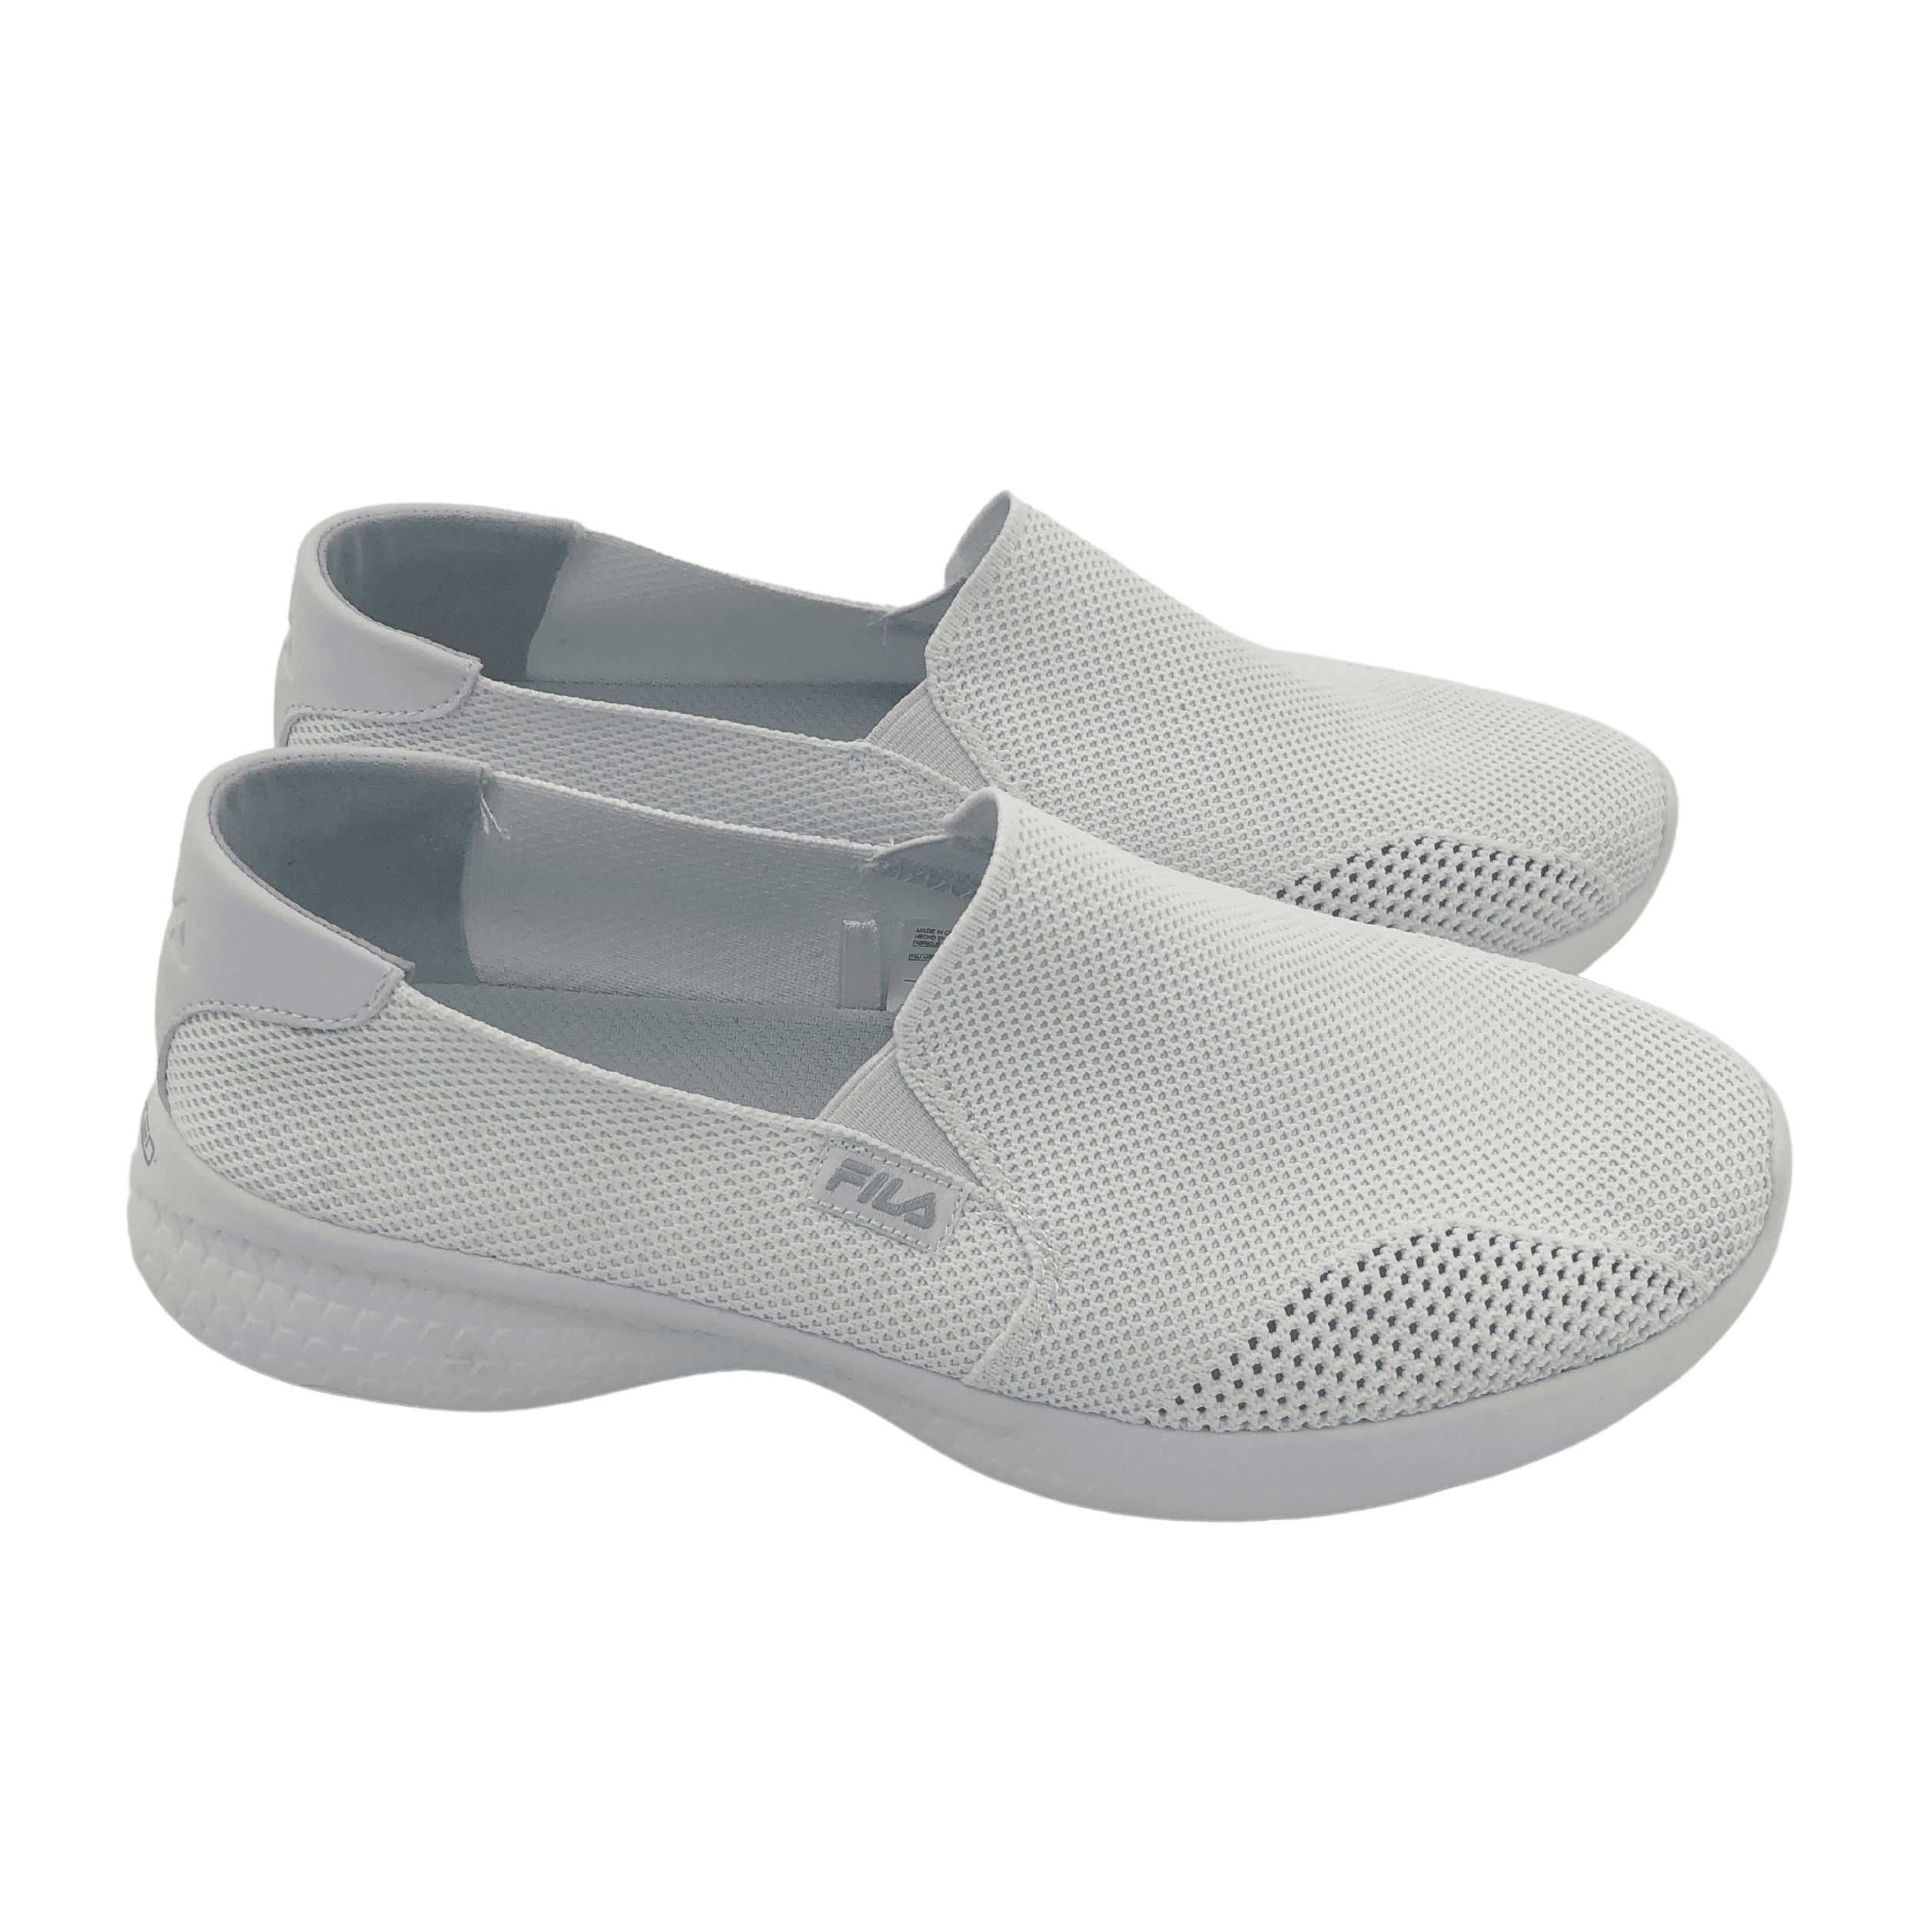 Fila Women's Slip-on Shoes / Mallorca / Energized insoles / Size: 11 / White